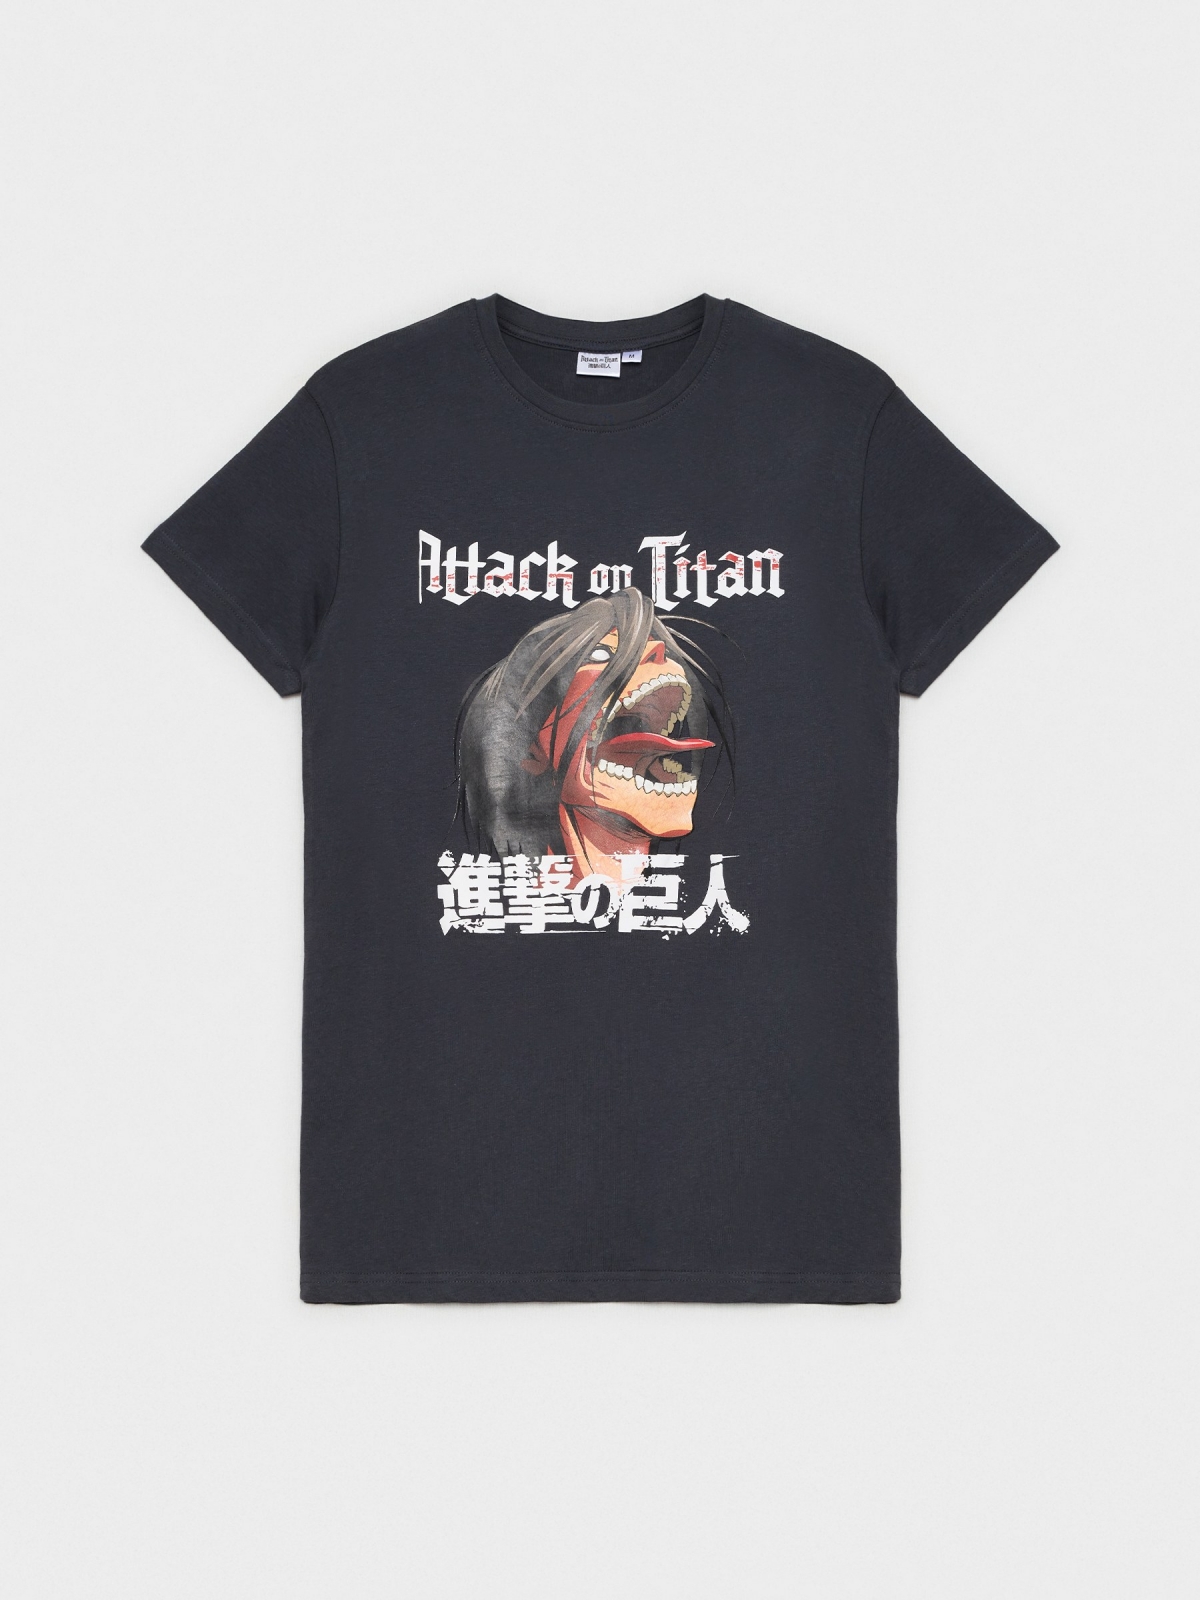  Attack on Titan printed t-shirt dark grey